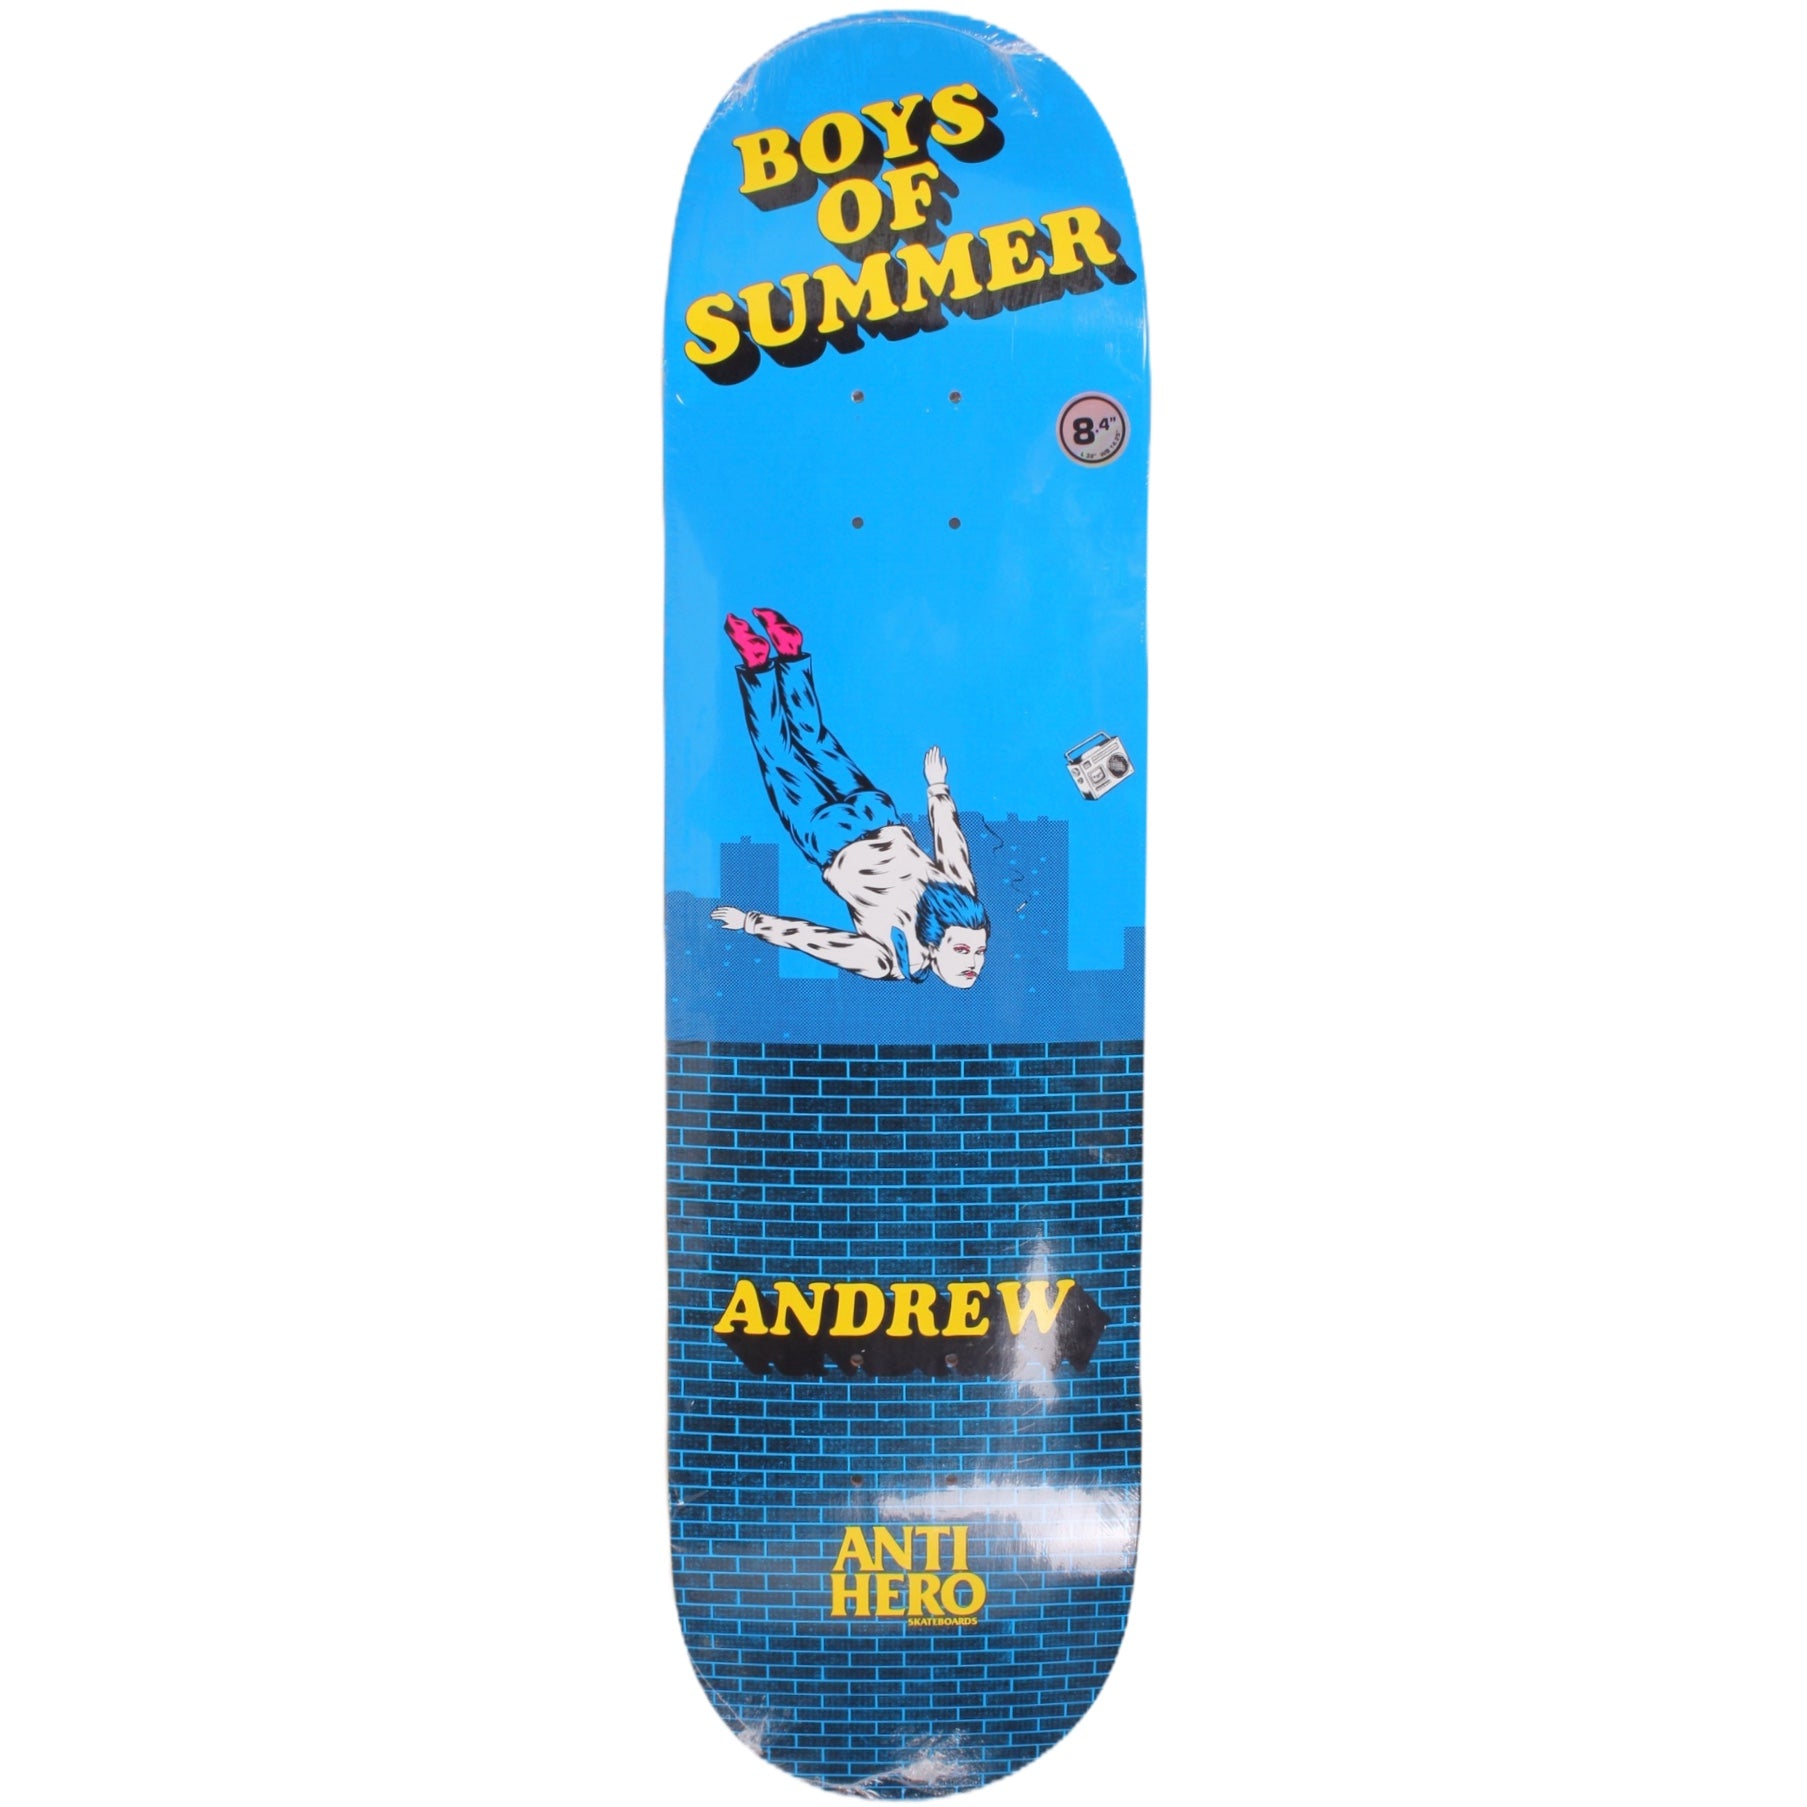 Mount Bank industrie Canberra Overripe Anti Hero Andrew Allen Boys of Summer Deck + Sealed BOS2 DVD -  Orchard Skateshop